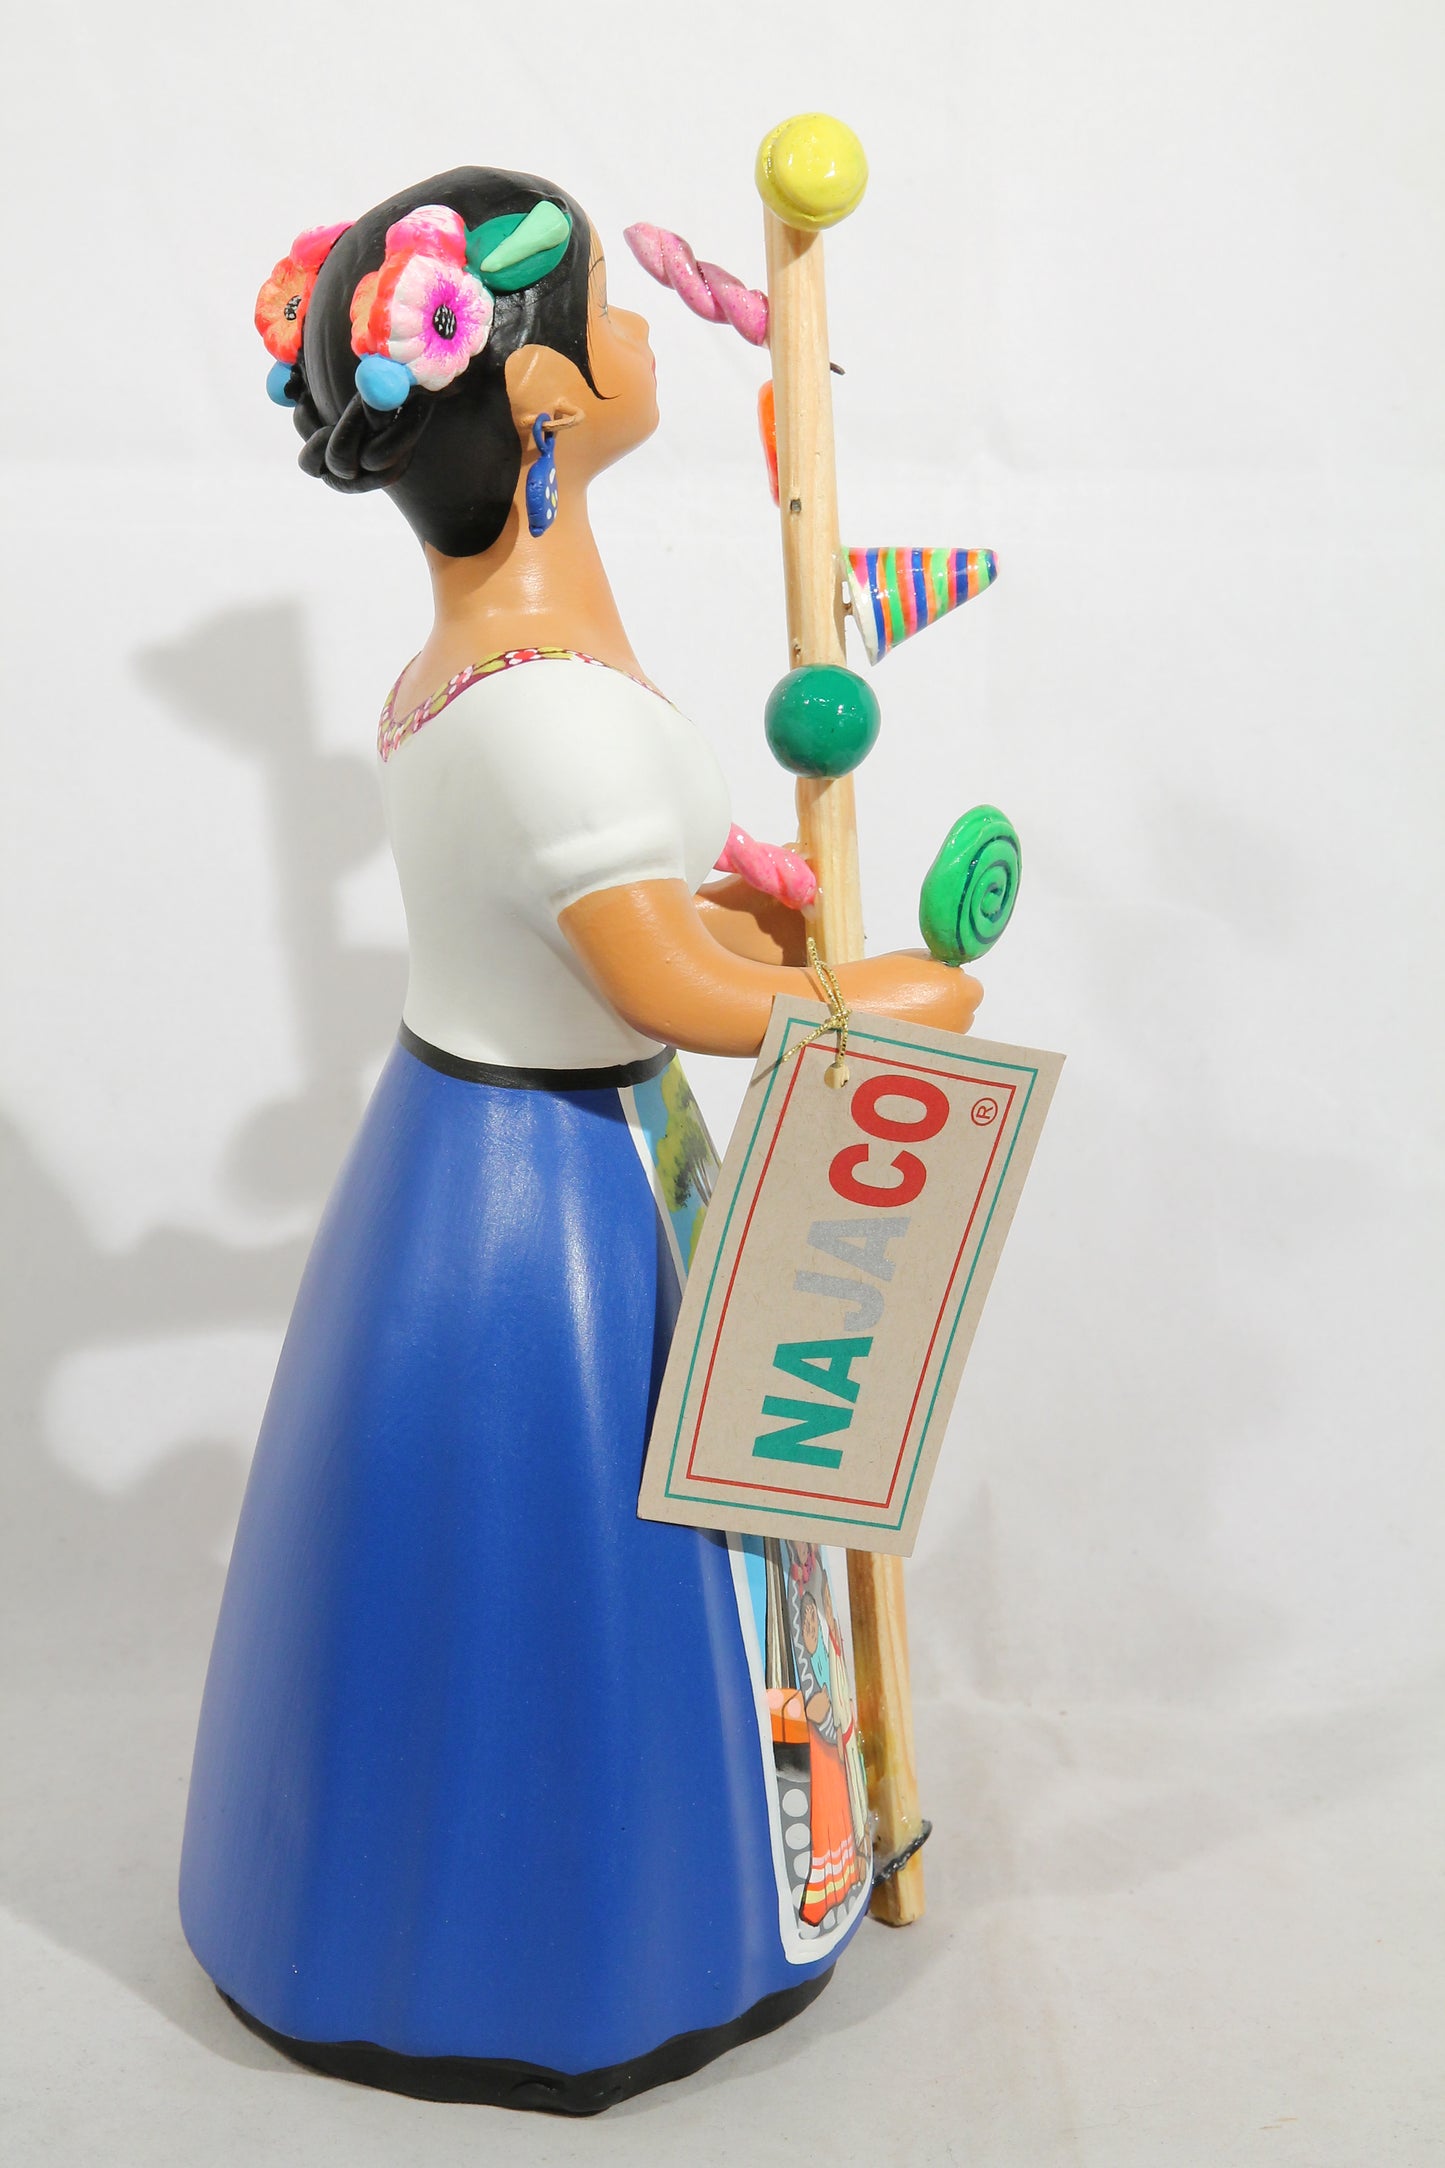 Najaco Lupita Ceramic Figurine Hard Candy Seller Folk Art New Blue #3